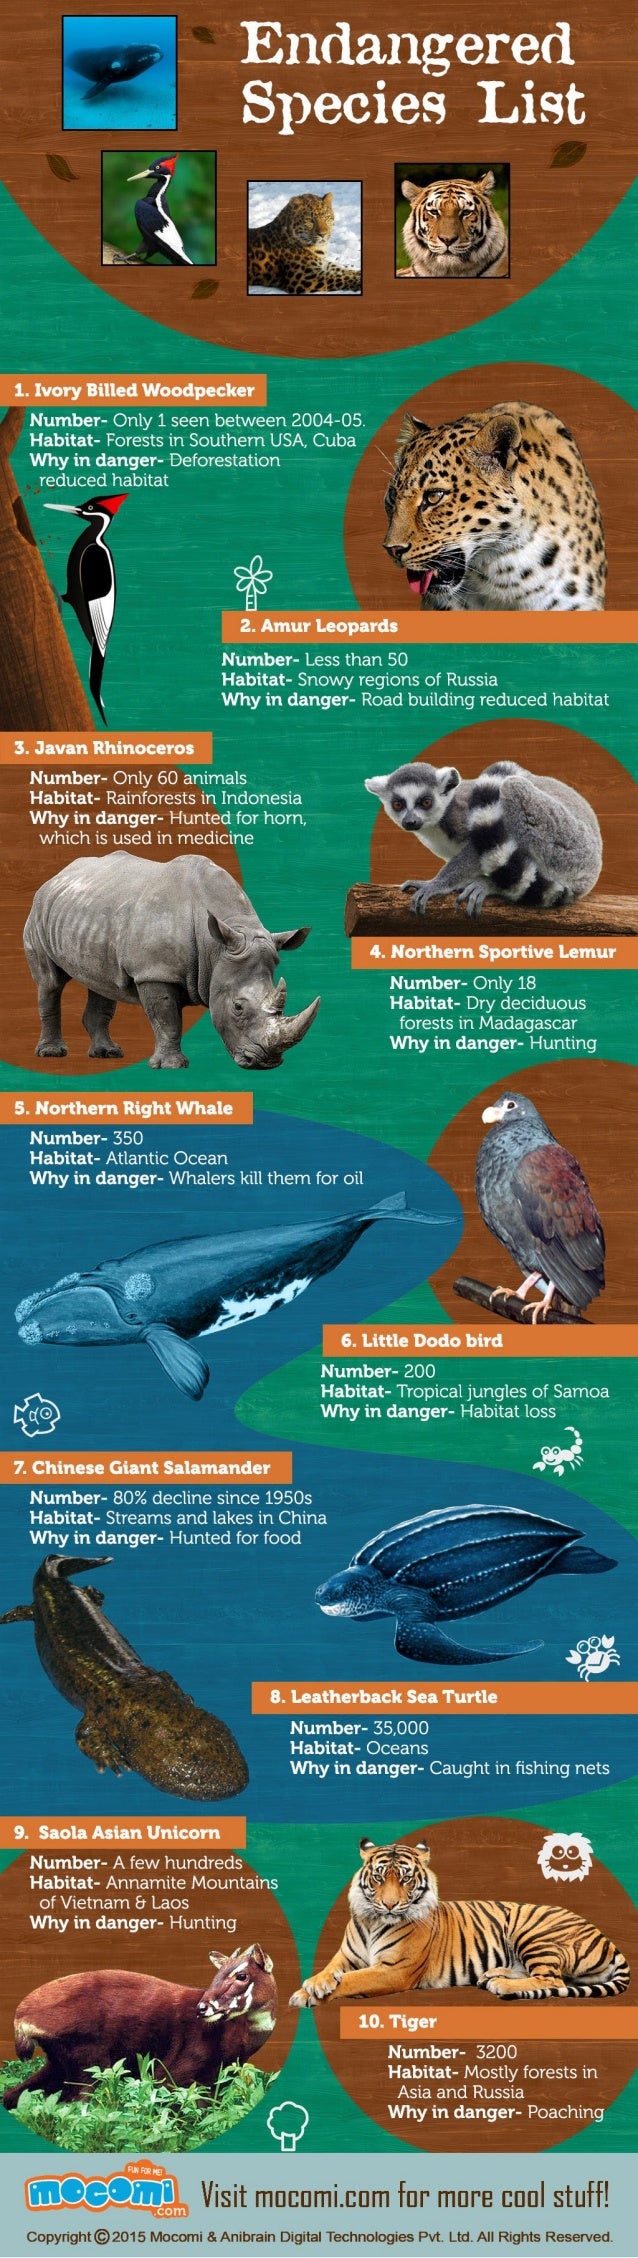 World's Top 10 Endangered Species List- General Knowledge for Kids